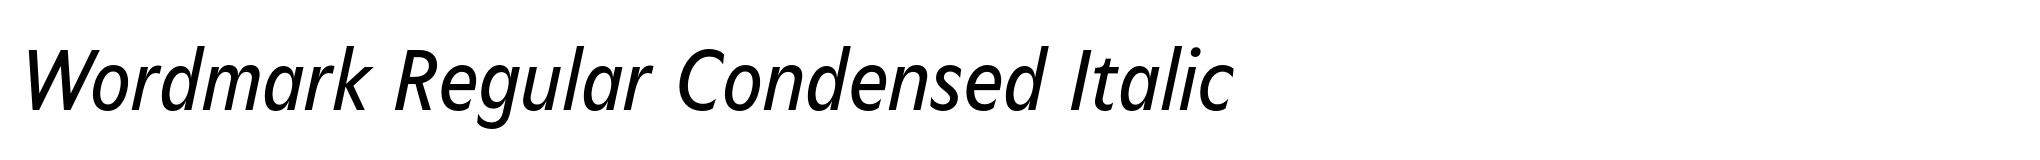 Wordmark Regular Condensed Italic image